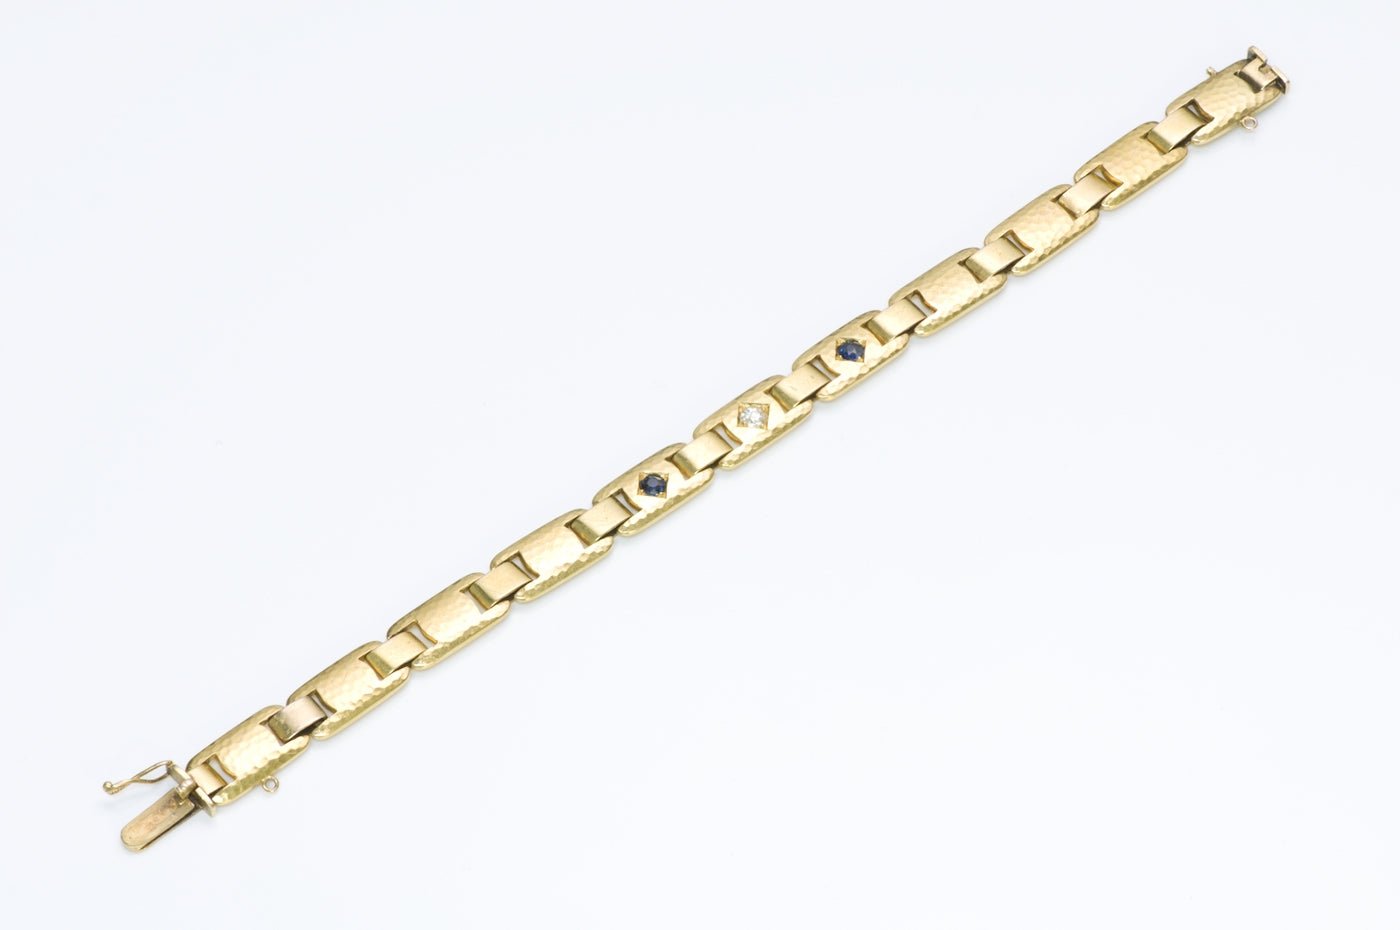 Antique Gold Sapphire Diamond Bracelet